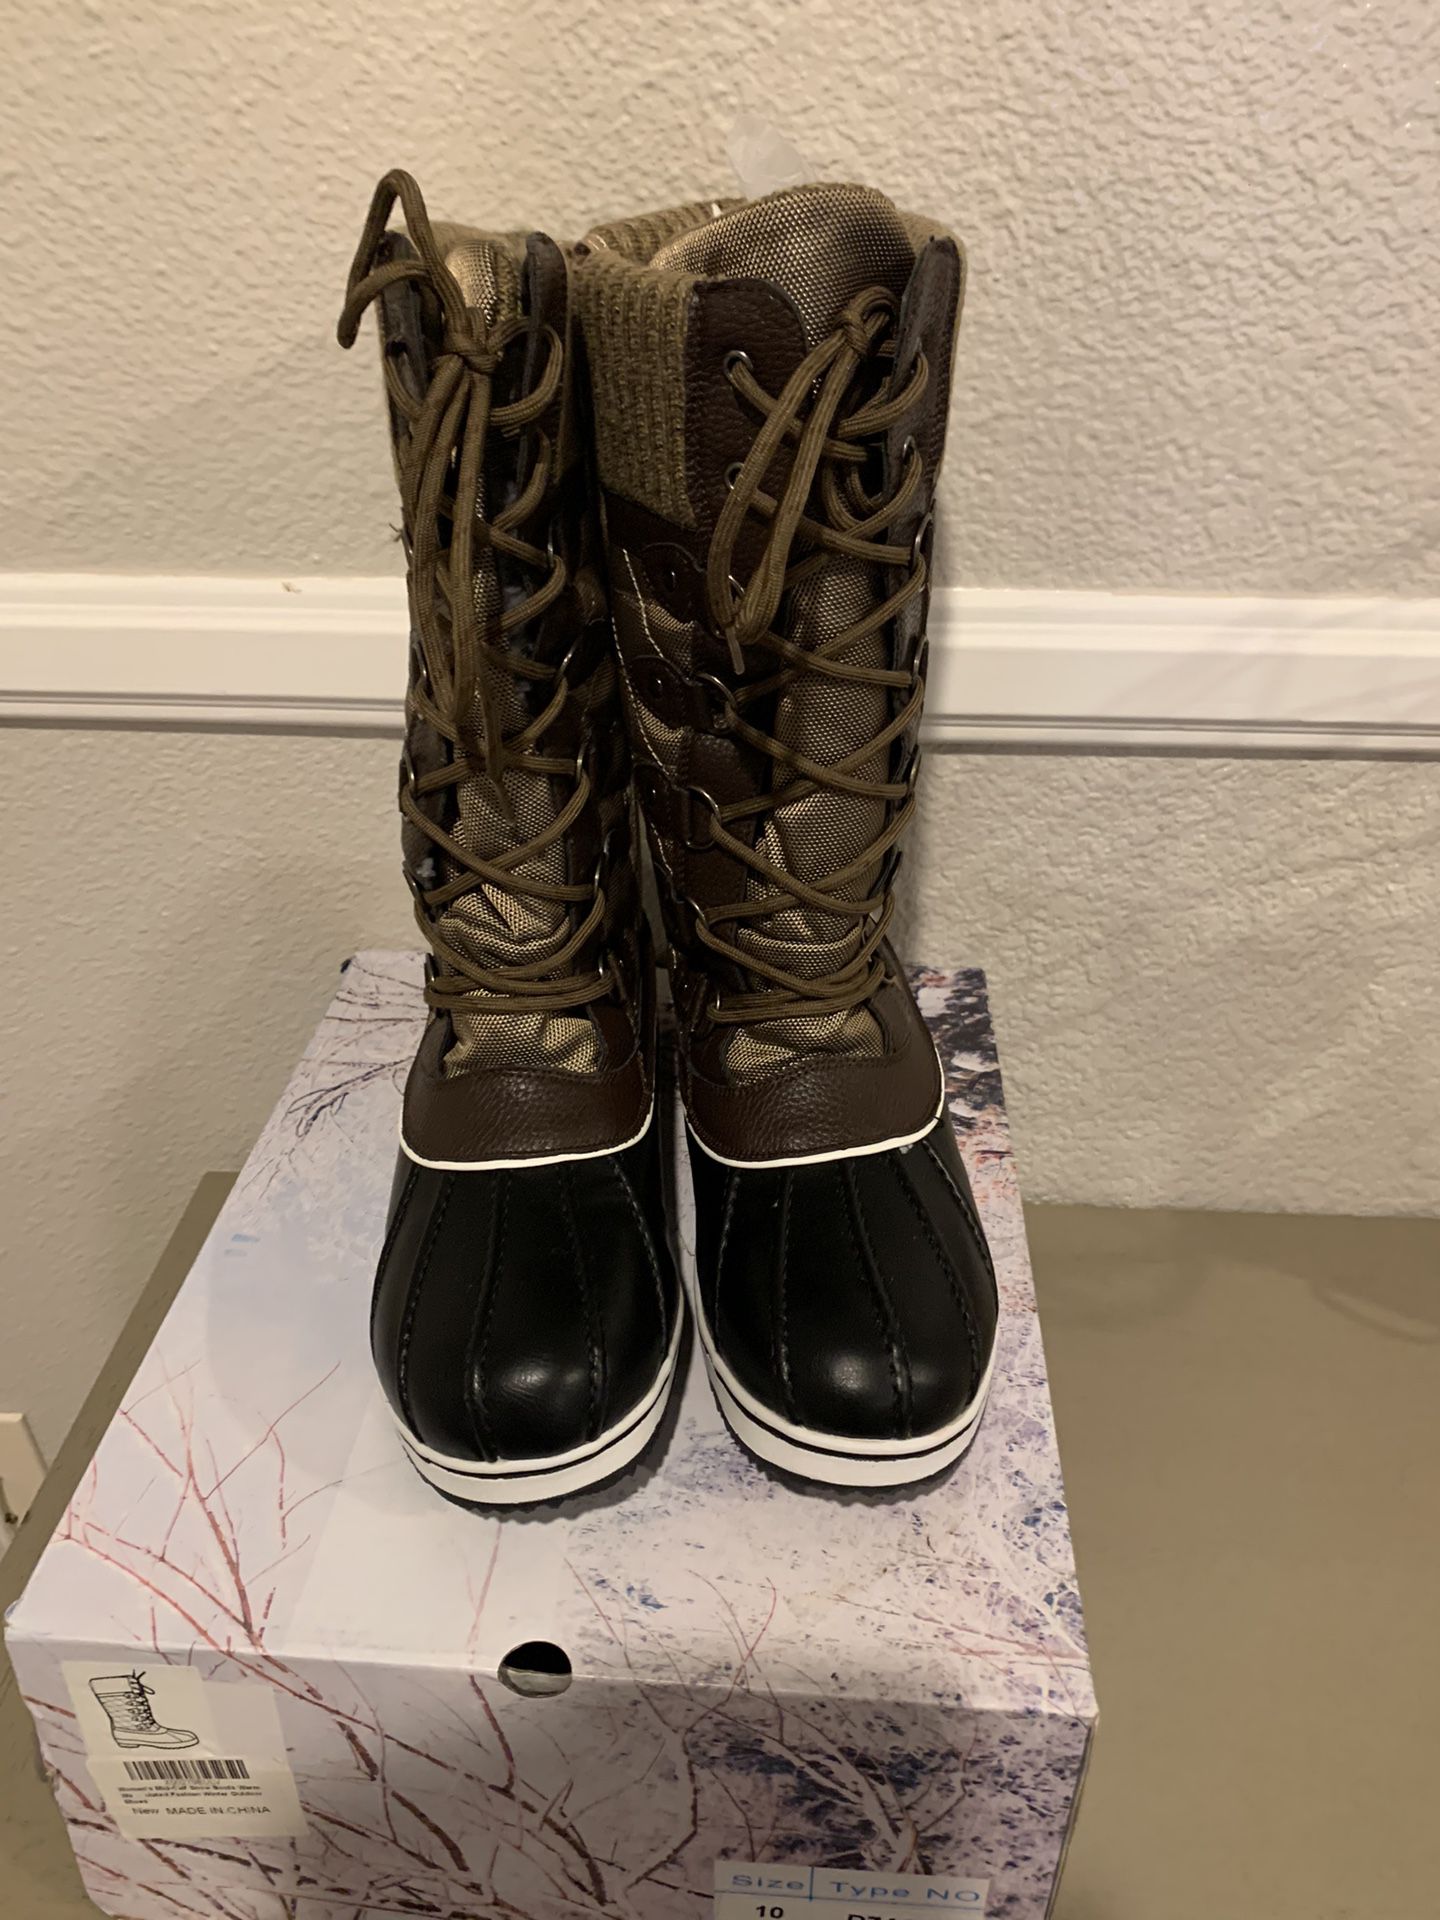 3M Thinsulate Women’s Mild-calf Snow Boots, Size 10